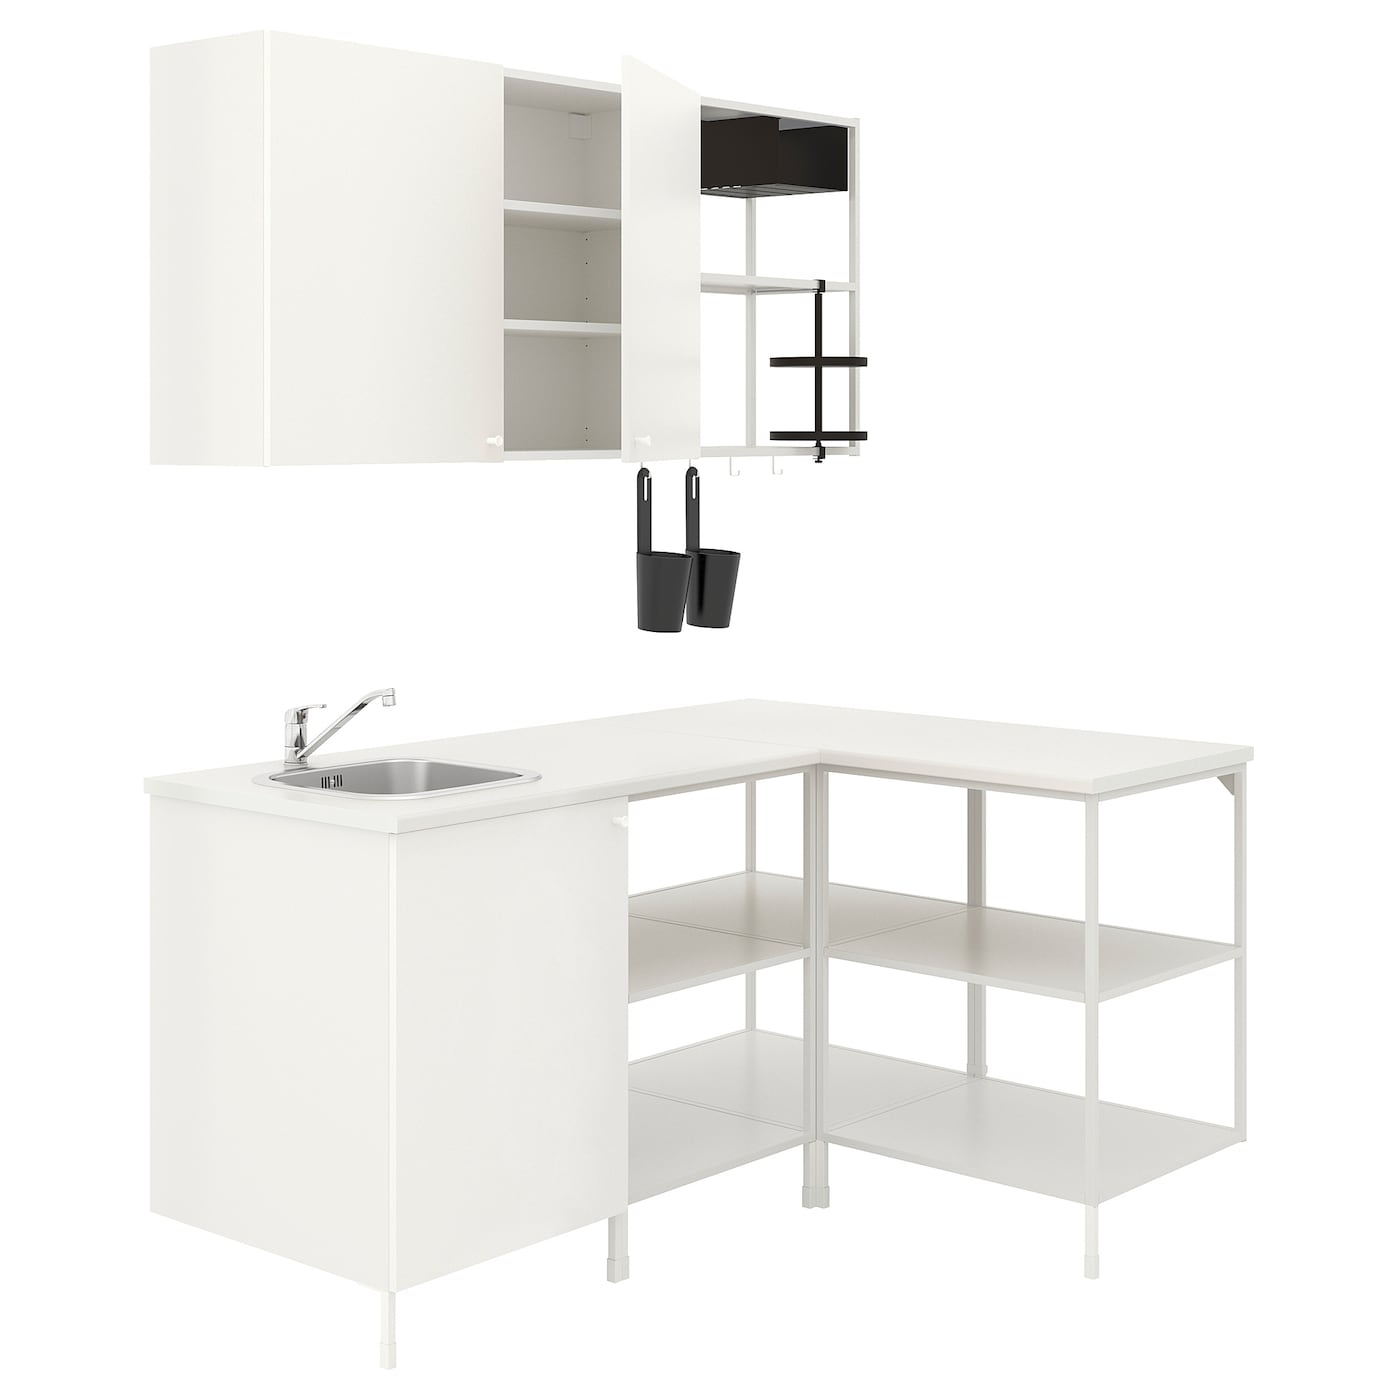 Угловая кухня -  ENHET  IKEA/ ЭНХЕТ ИКЕА, 181,5х75 см, белый/черный